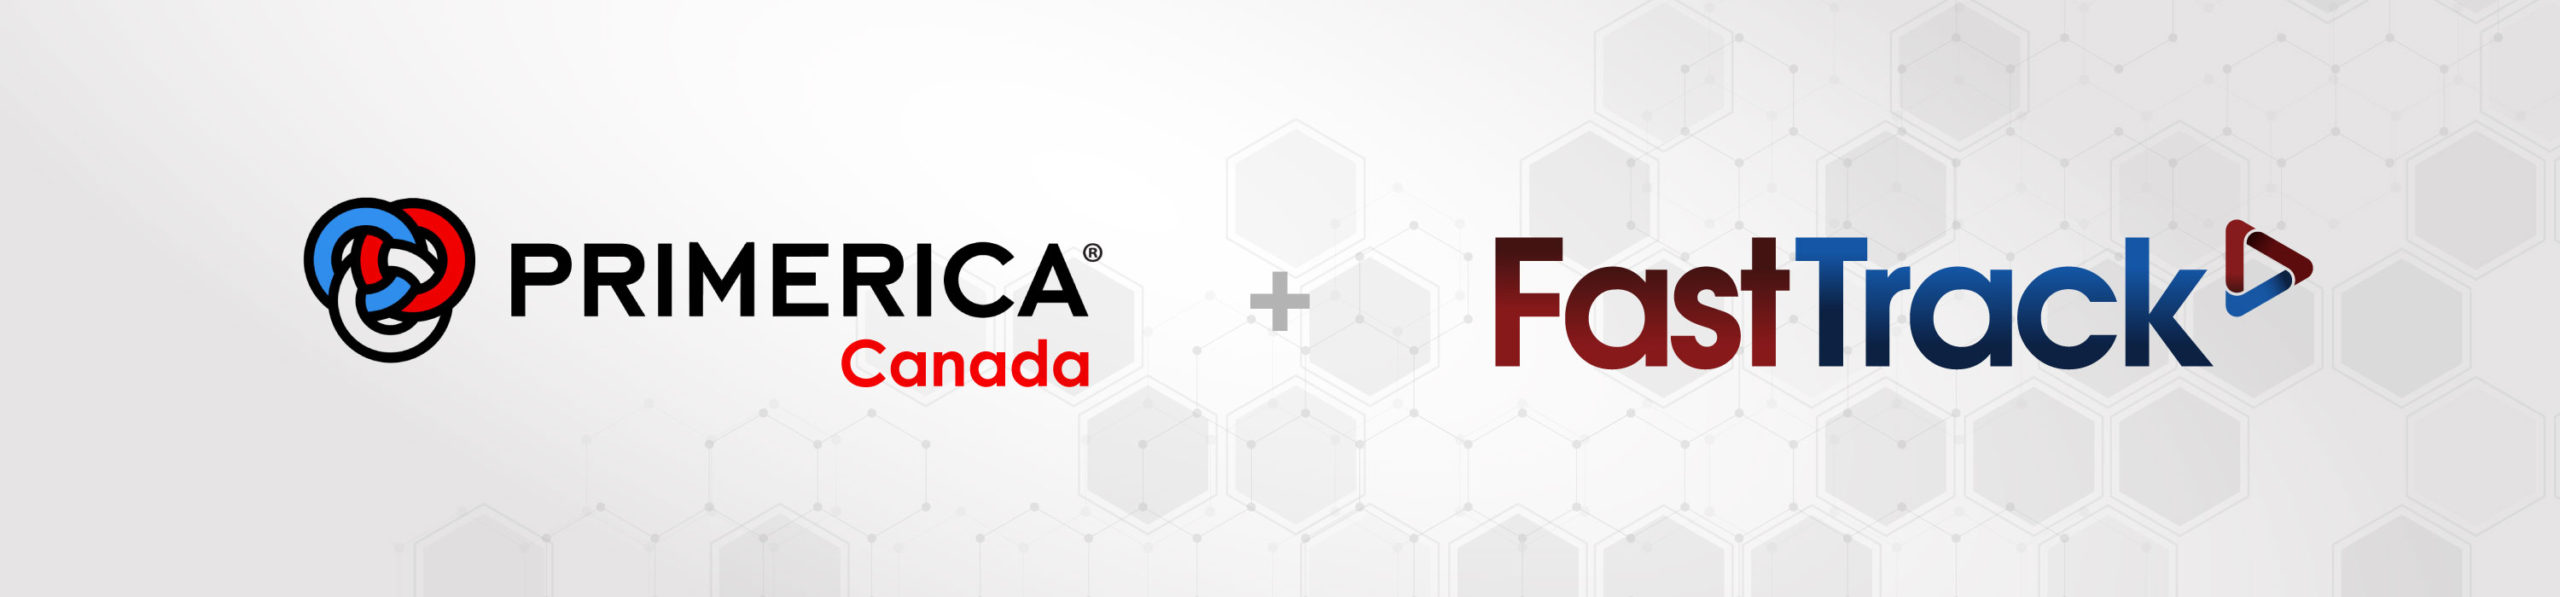 Primerica Canada Partnership Renewal